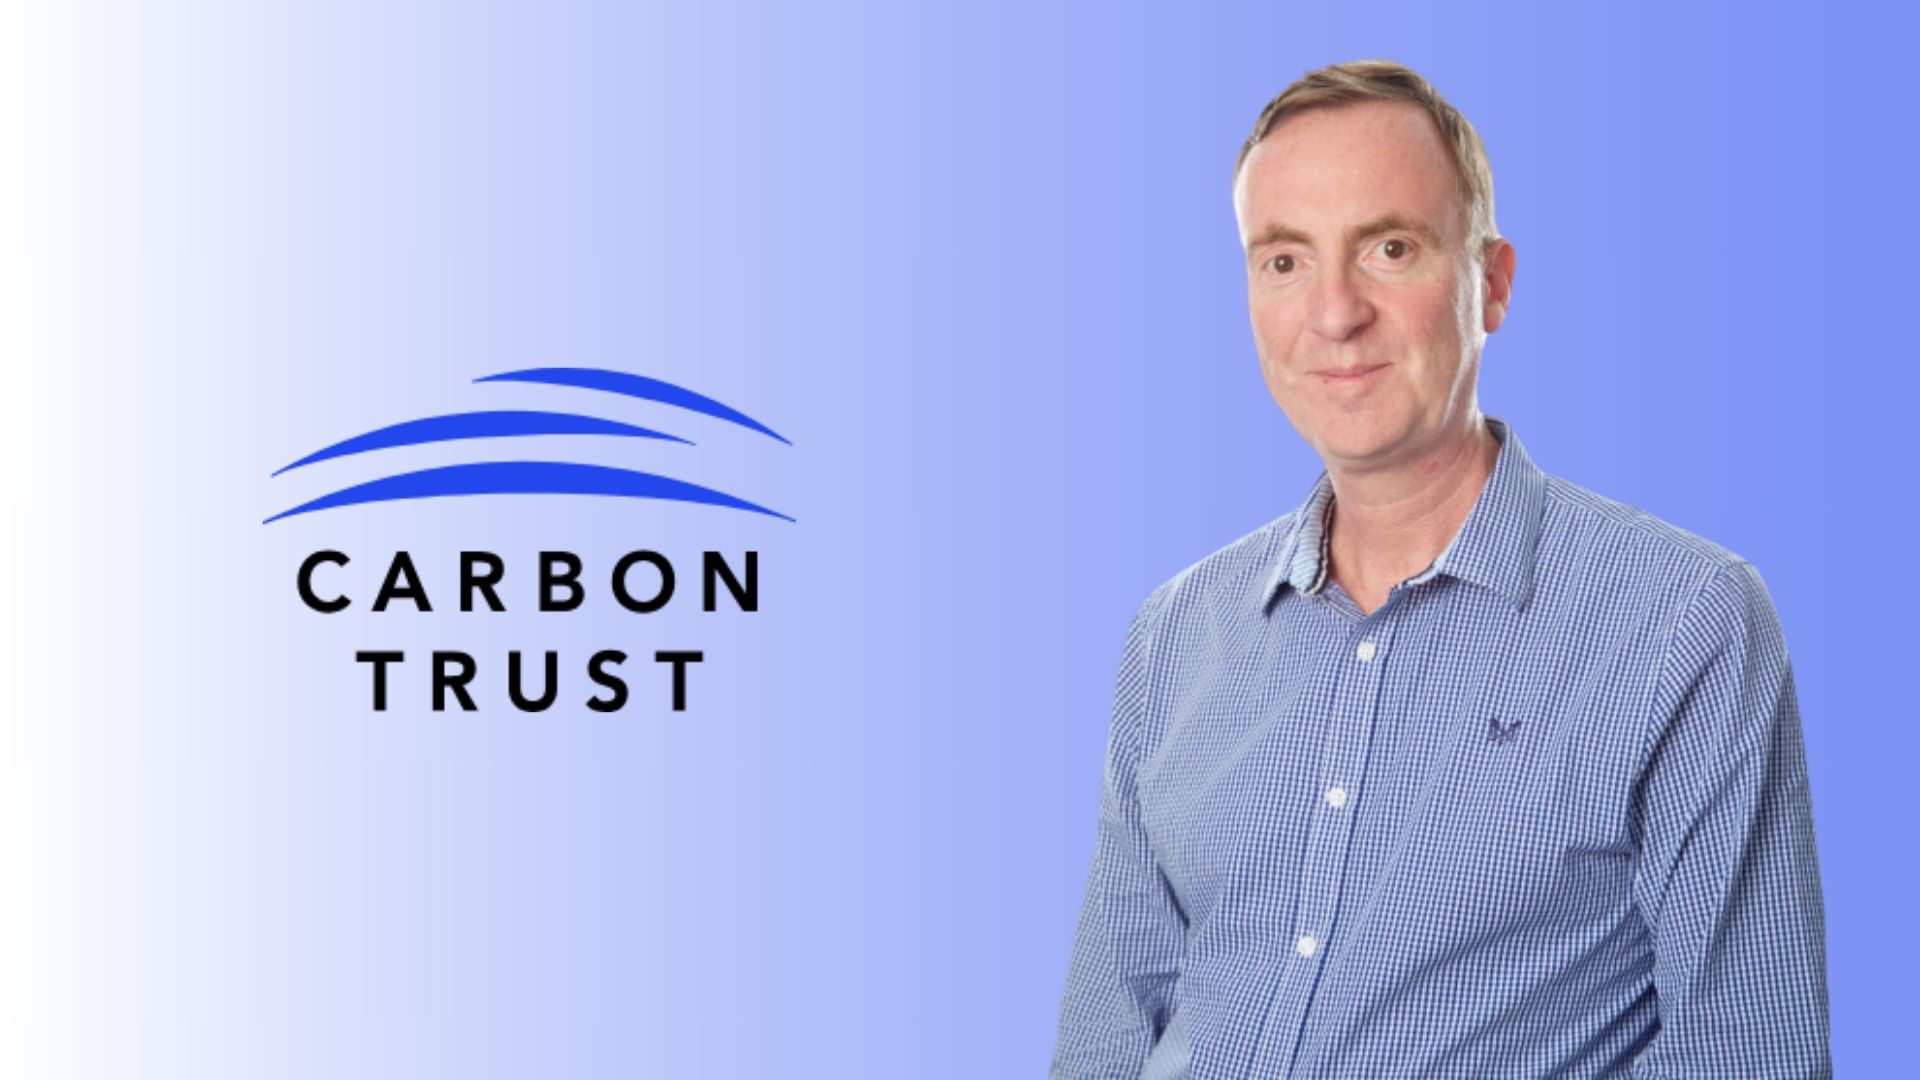 Michael Rea announced as CEO of the Carbon Trust, succeeding Chris Stark